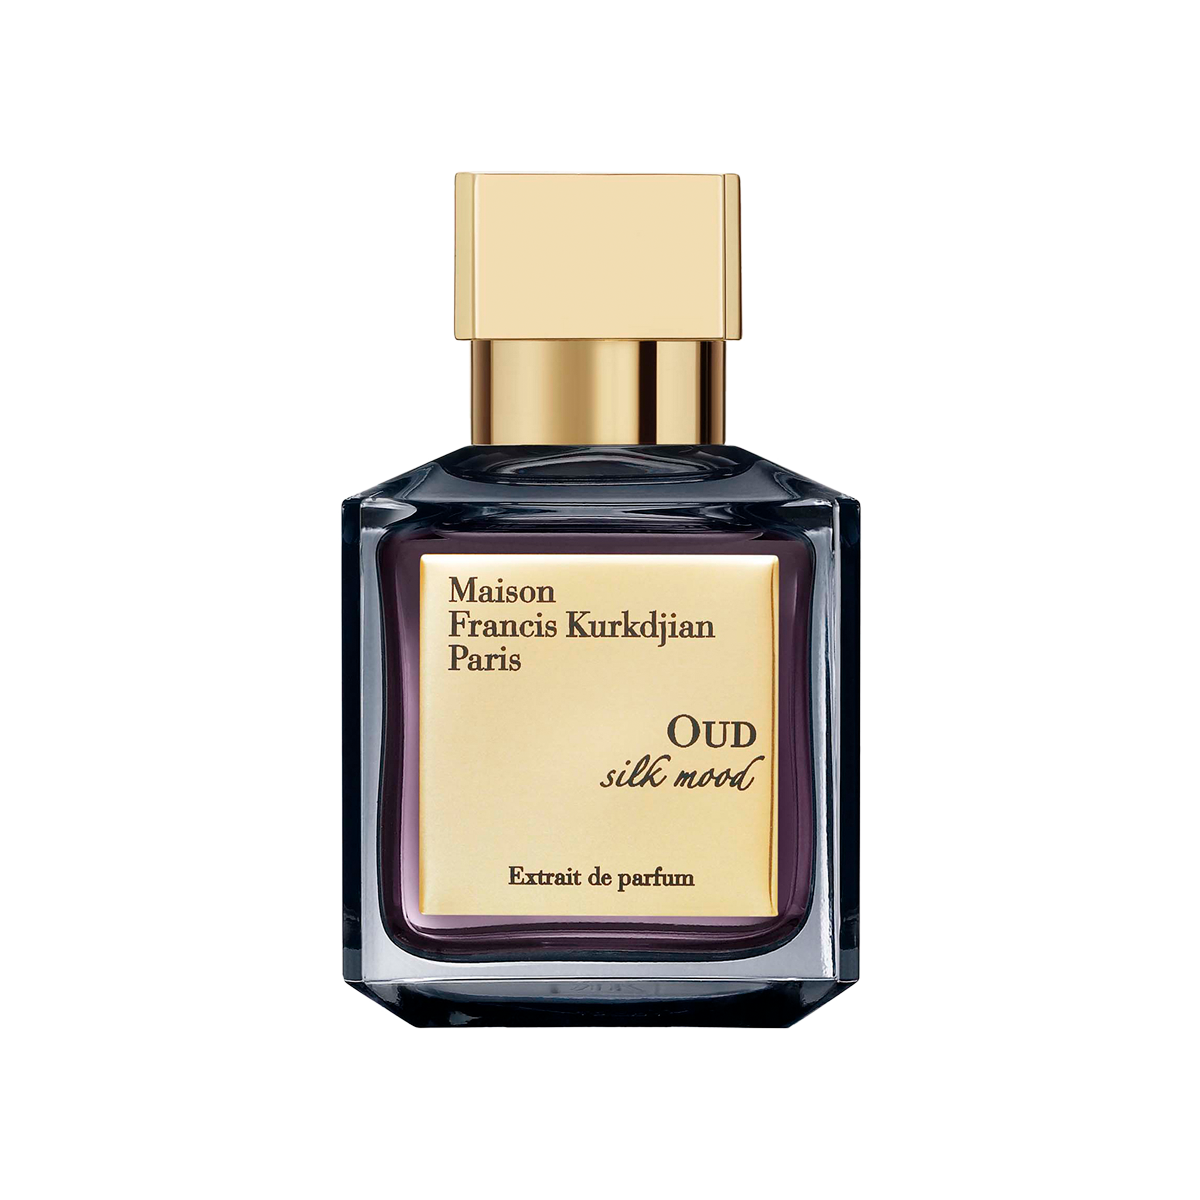 Maison Francis Kurkdjian - Oud Silk Mood Extrait de parfum